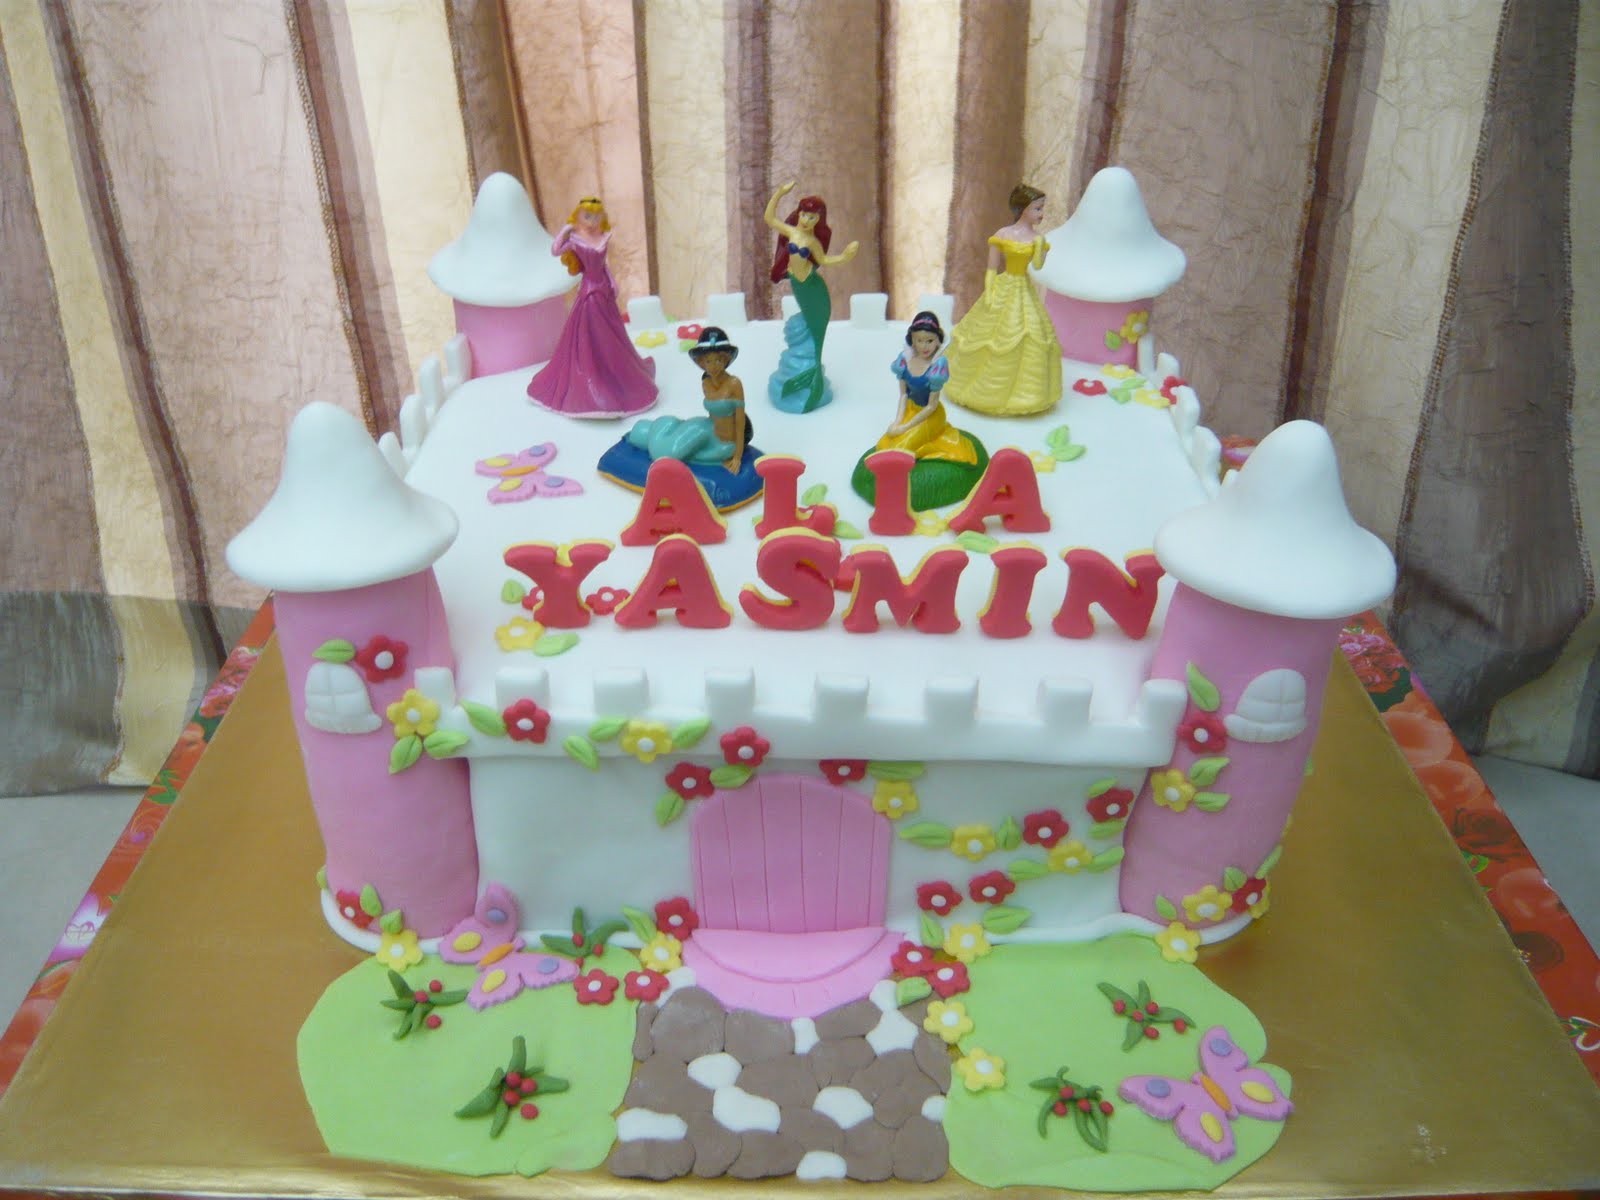 Happy Birthday Cake With Name Yasmin - HD Wallpaper 